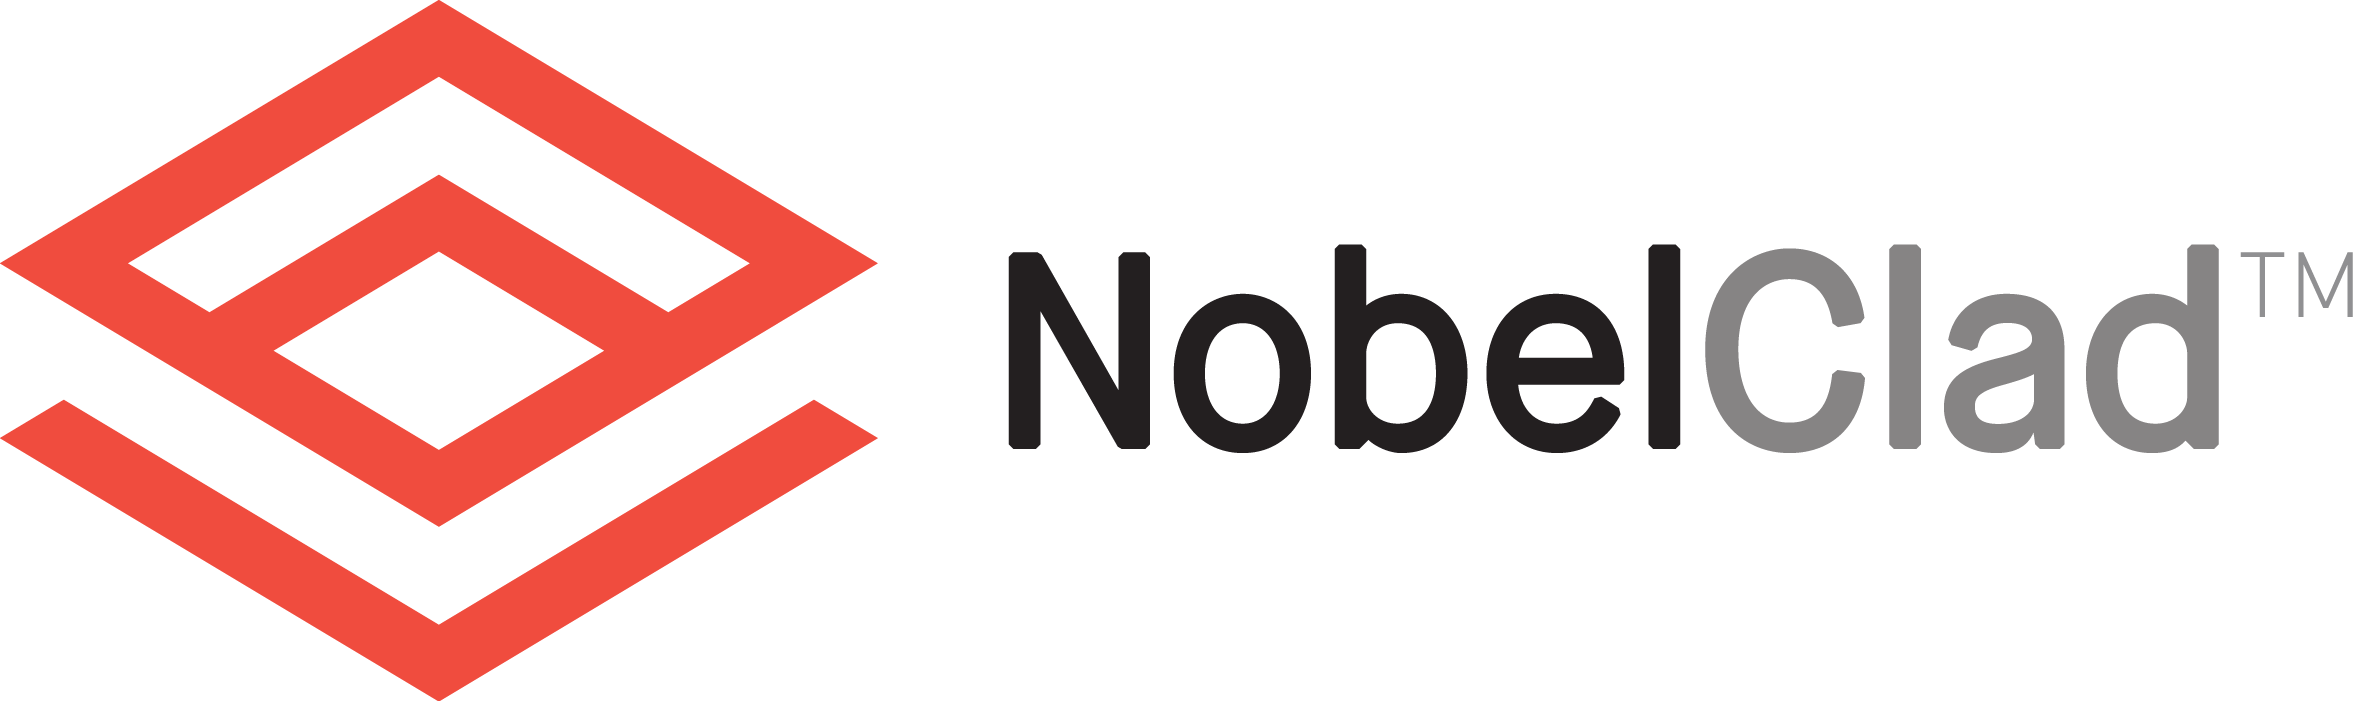 NobelClad_logo_color&black_RGB.png